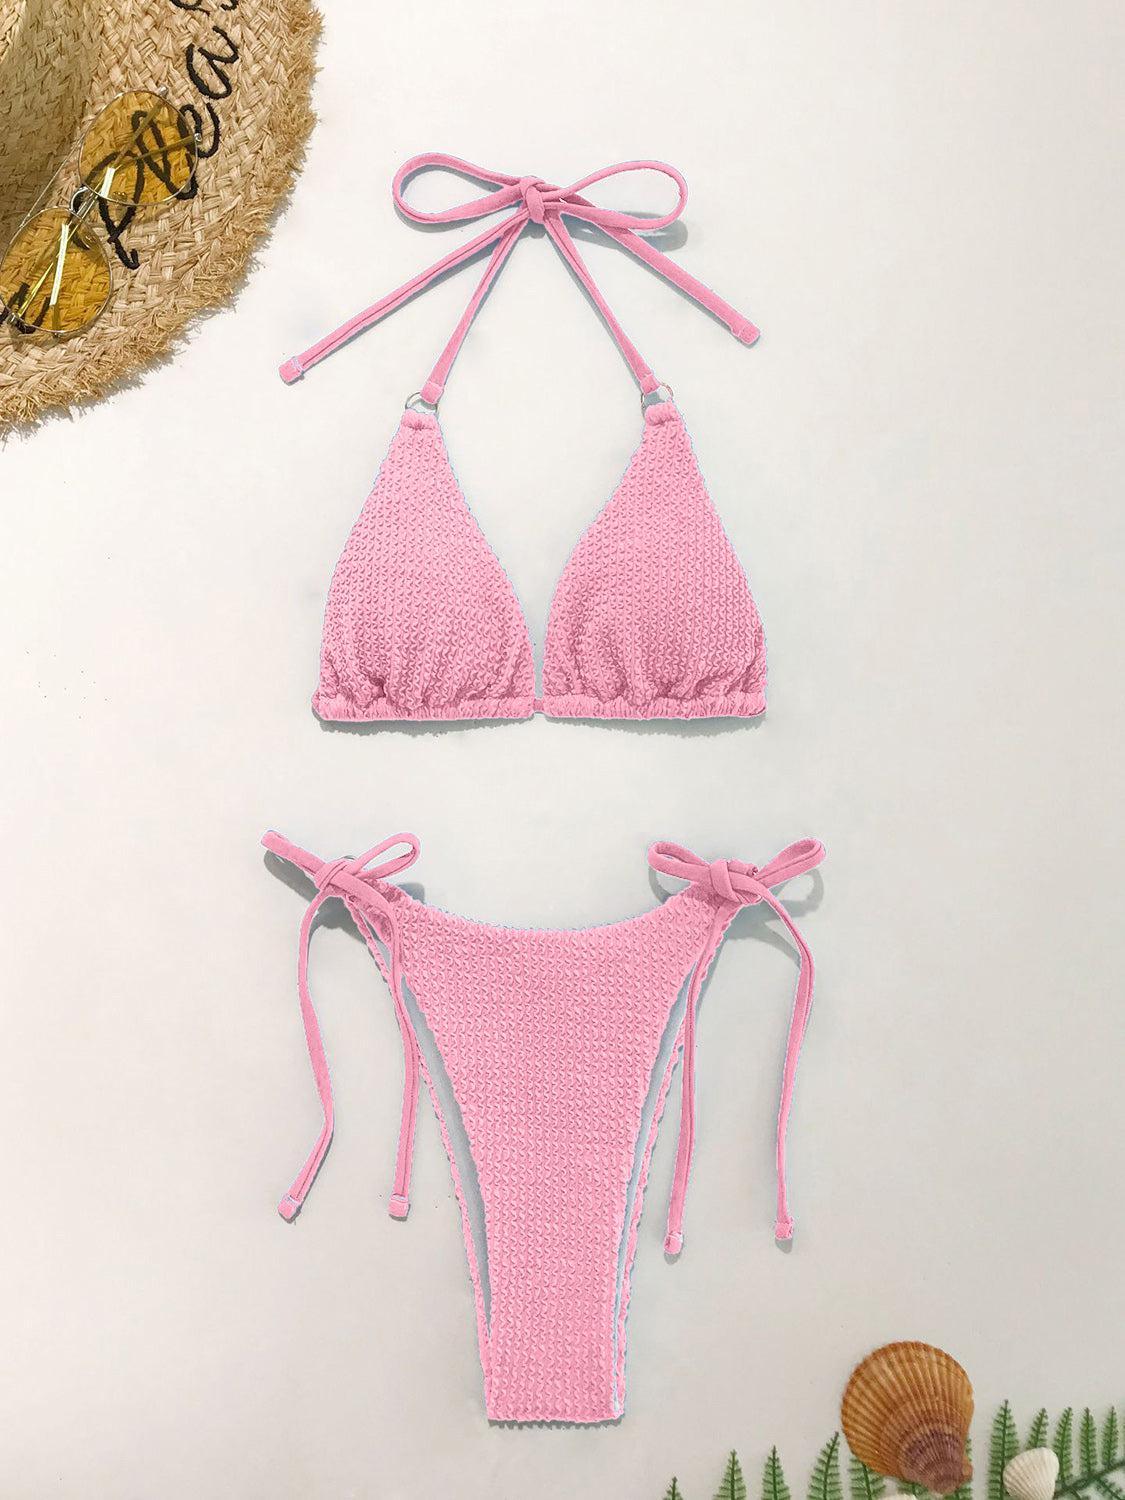 a pink bikini top and bottom with ties